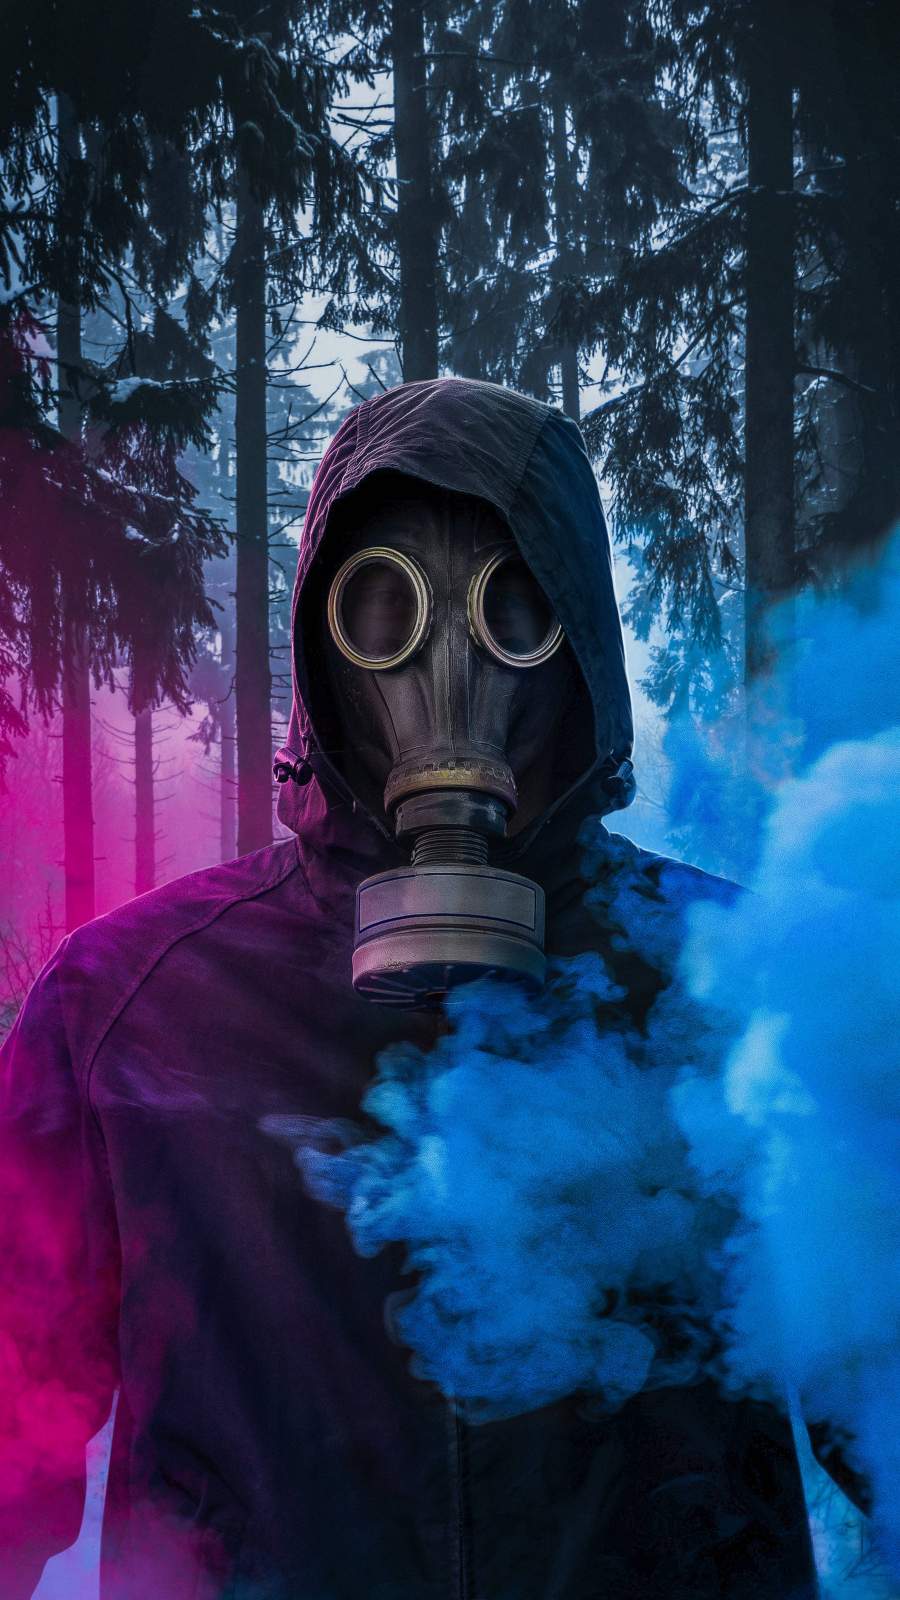 Gas Mask Toxic Digital Art 4K Wallpaper 41955